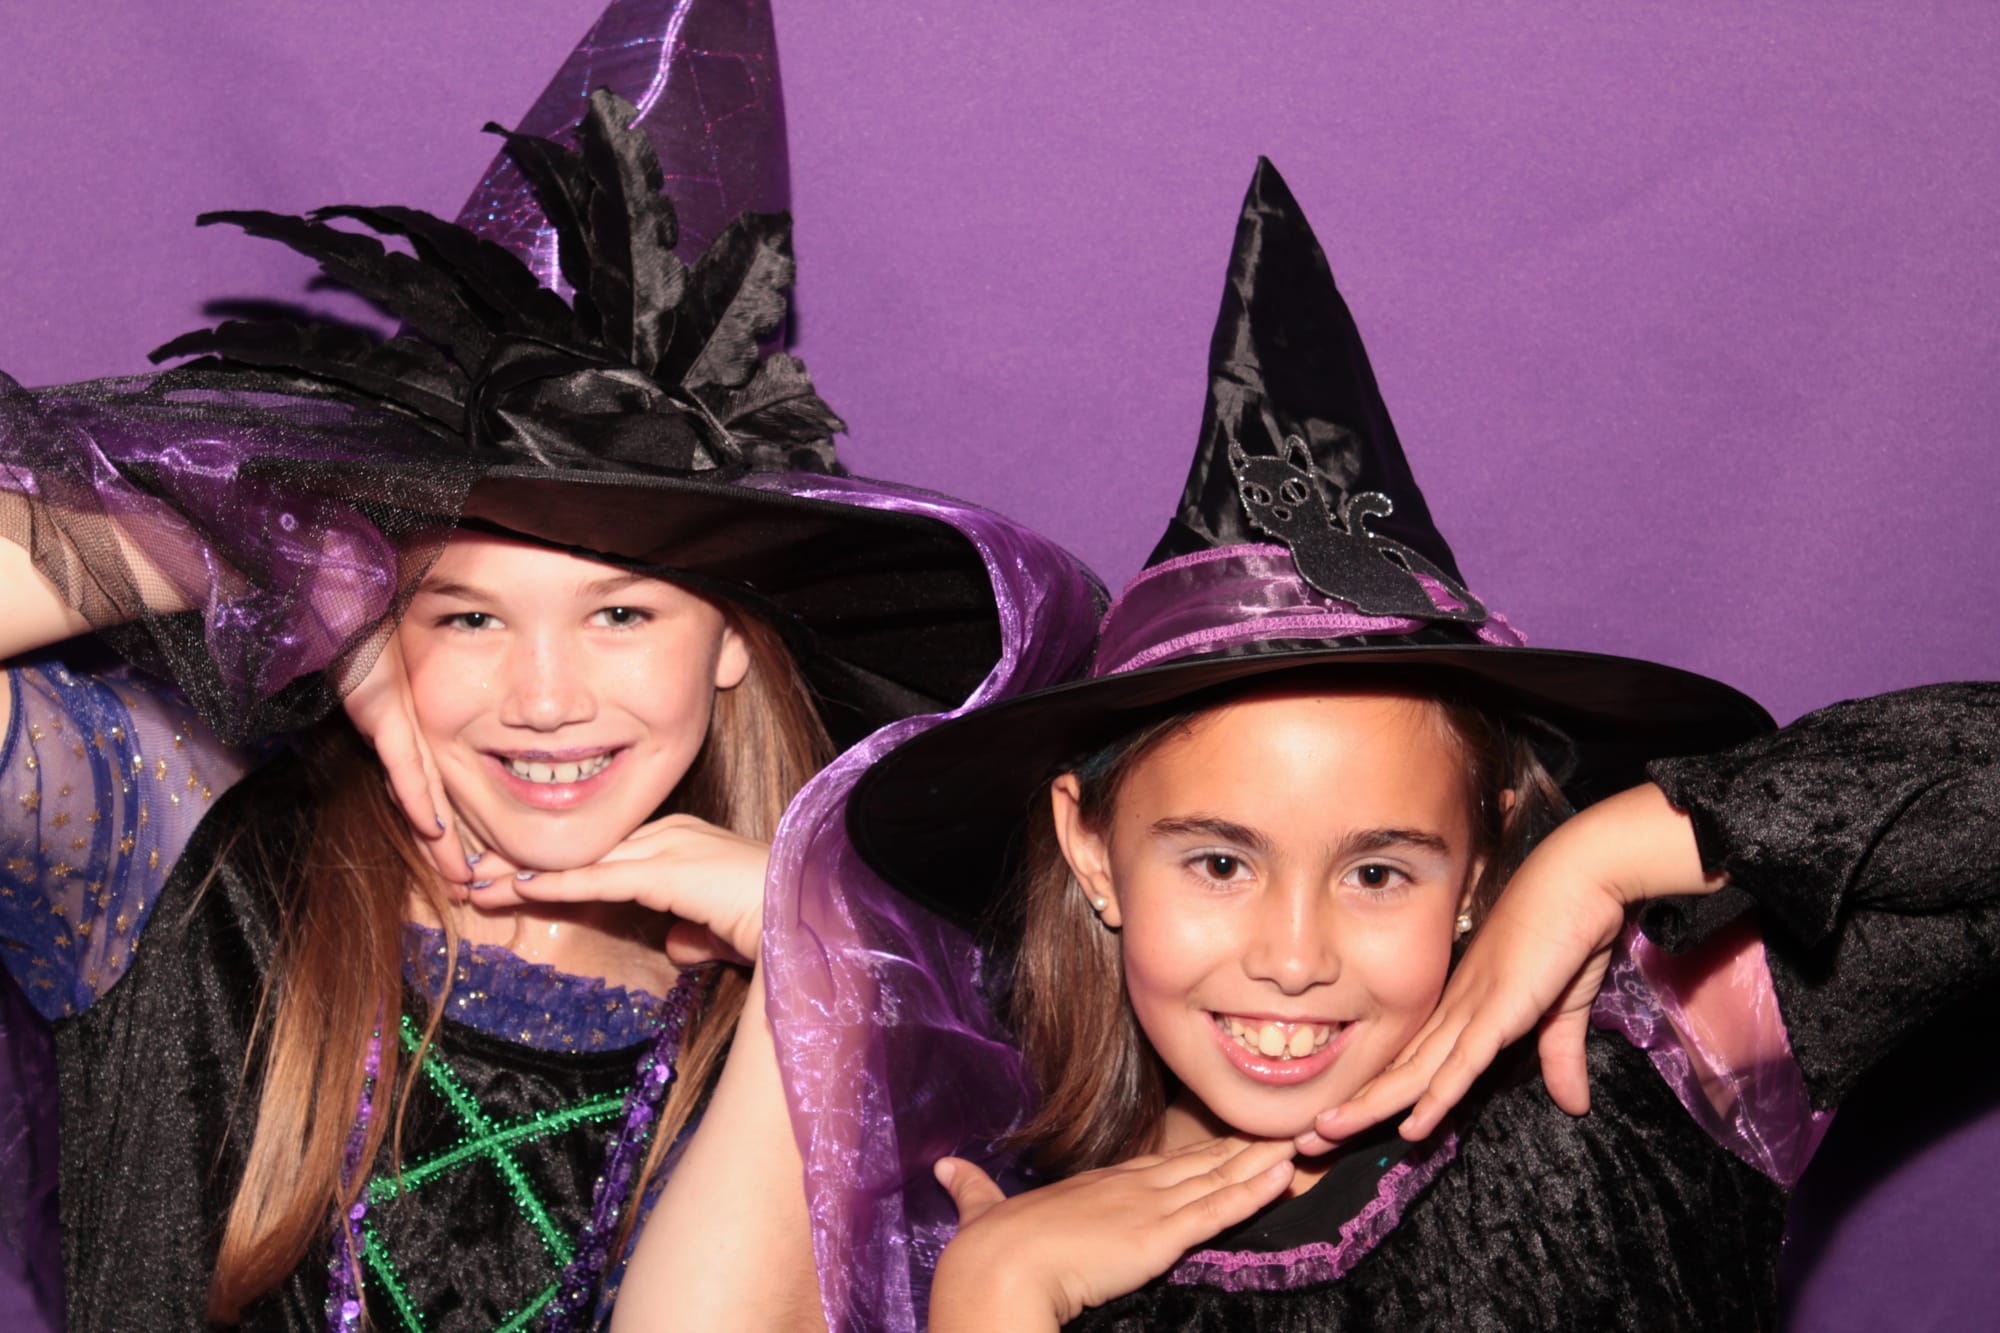 Photo Booth-Rental-Austin-Party-Halloween-Fun-Memories-No. 1-Costumes